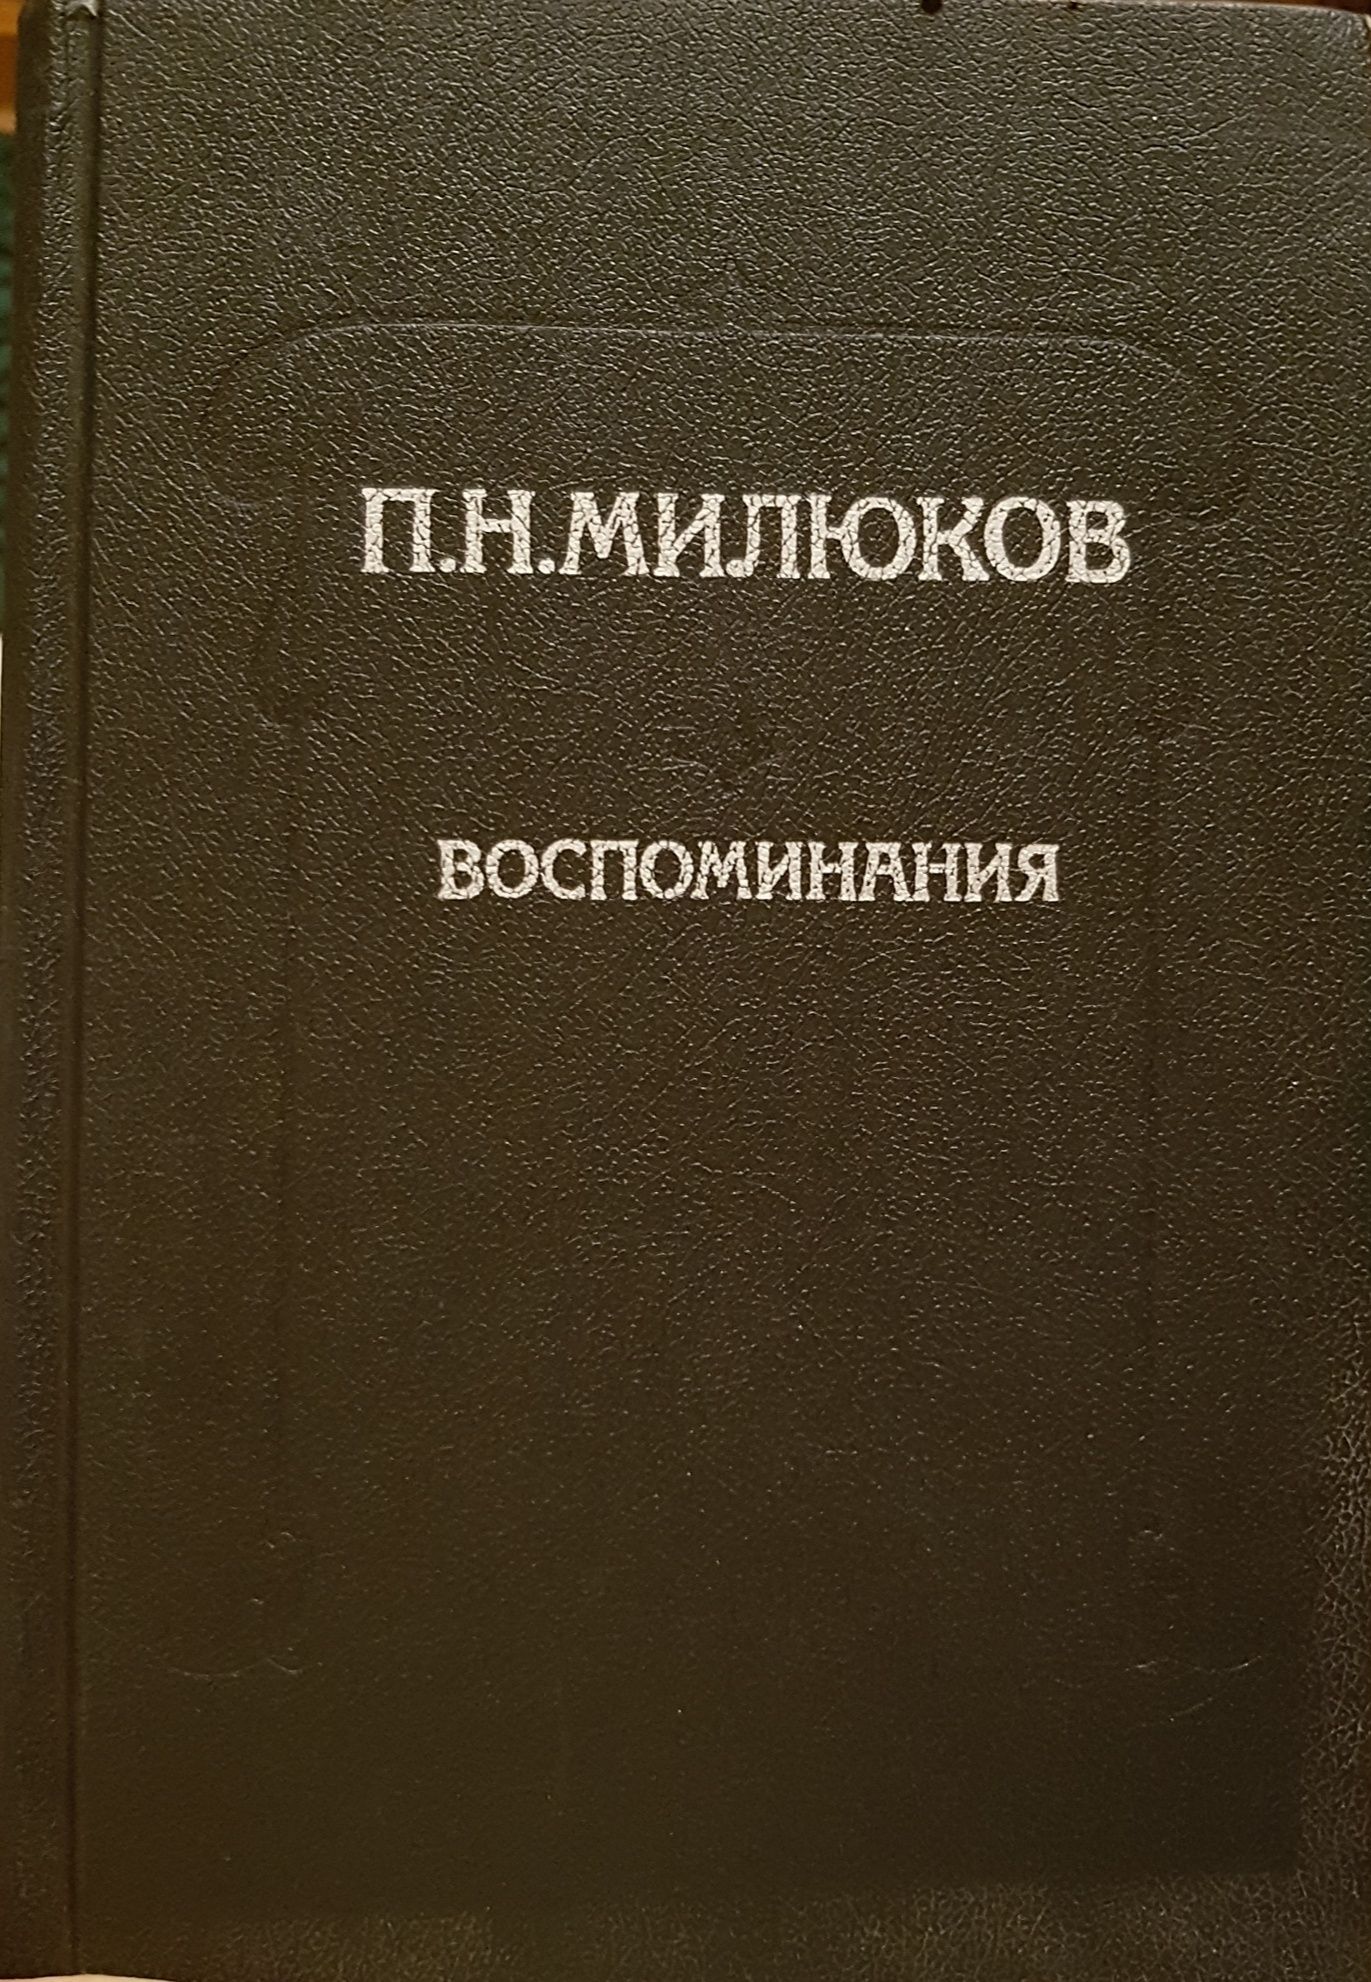 Книга П.Н. Милюков "Воспоминания"